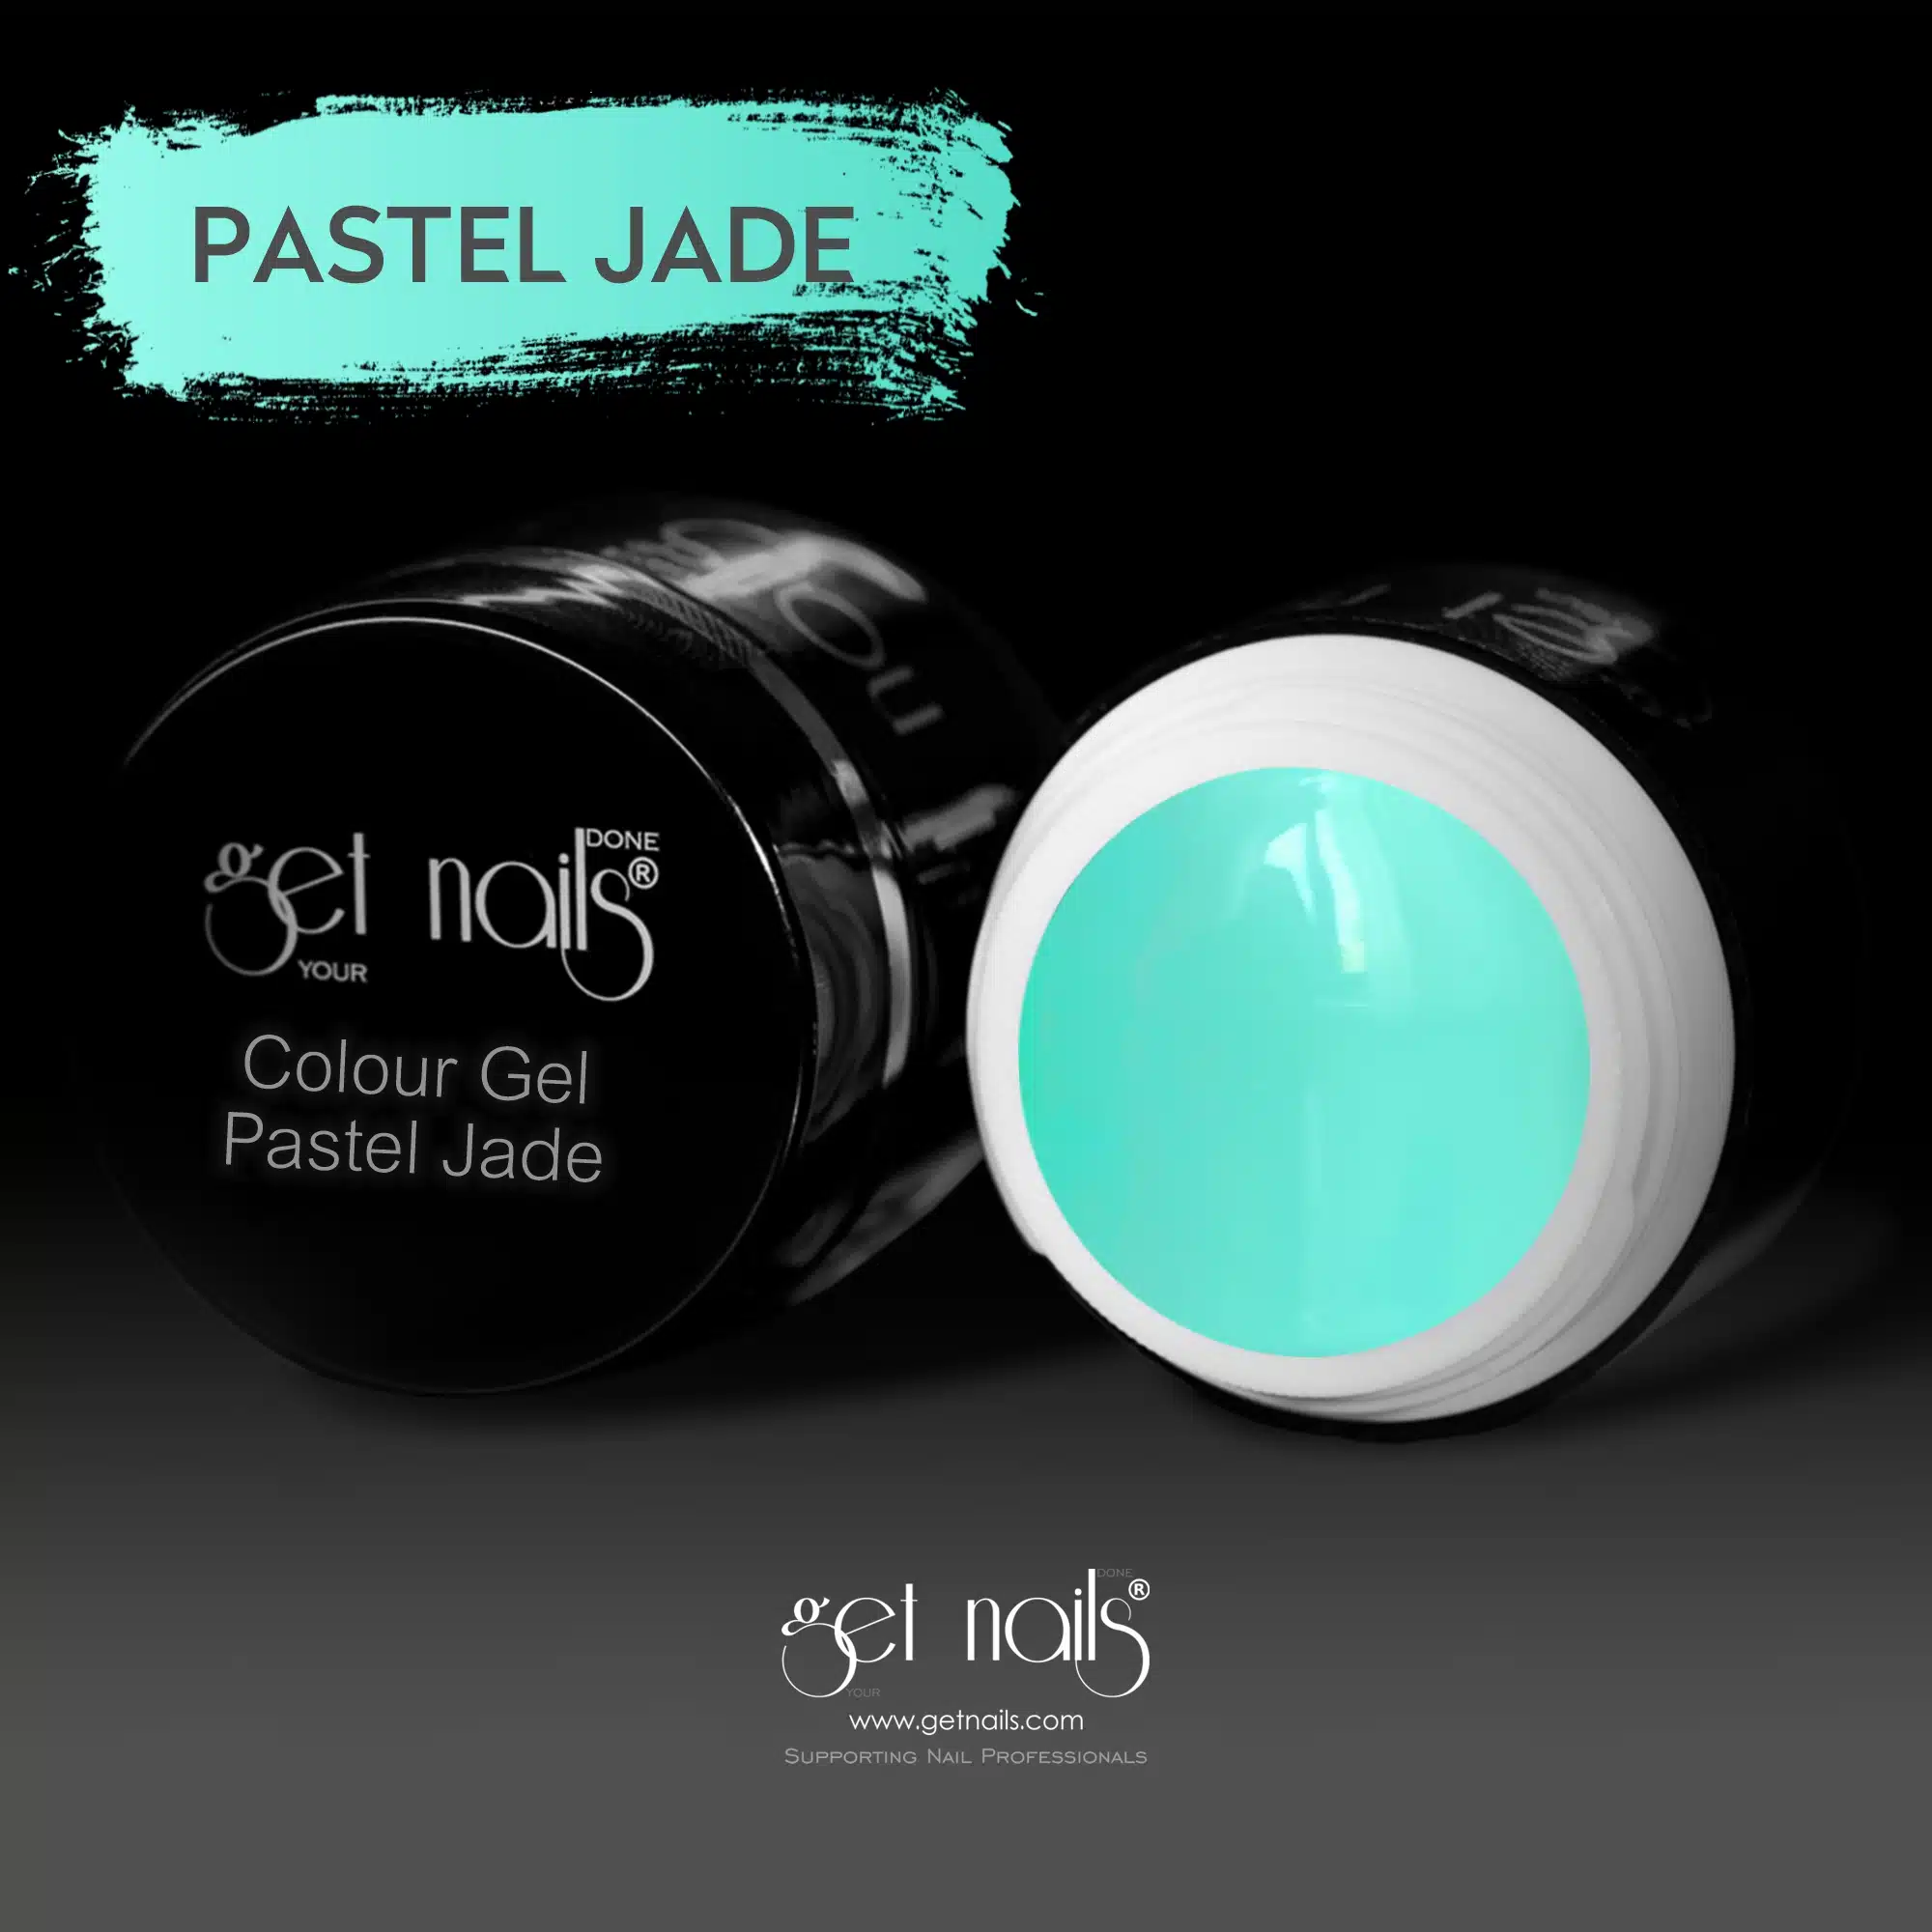 Get Nails Austria - Gel colorato Pastel Jade 5g